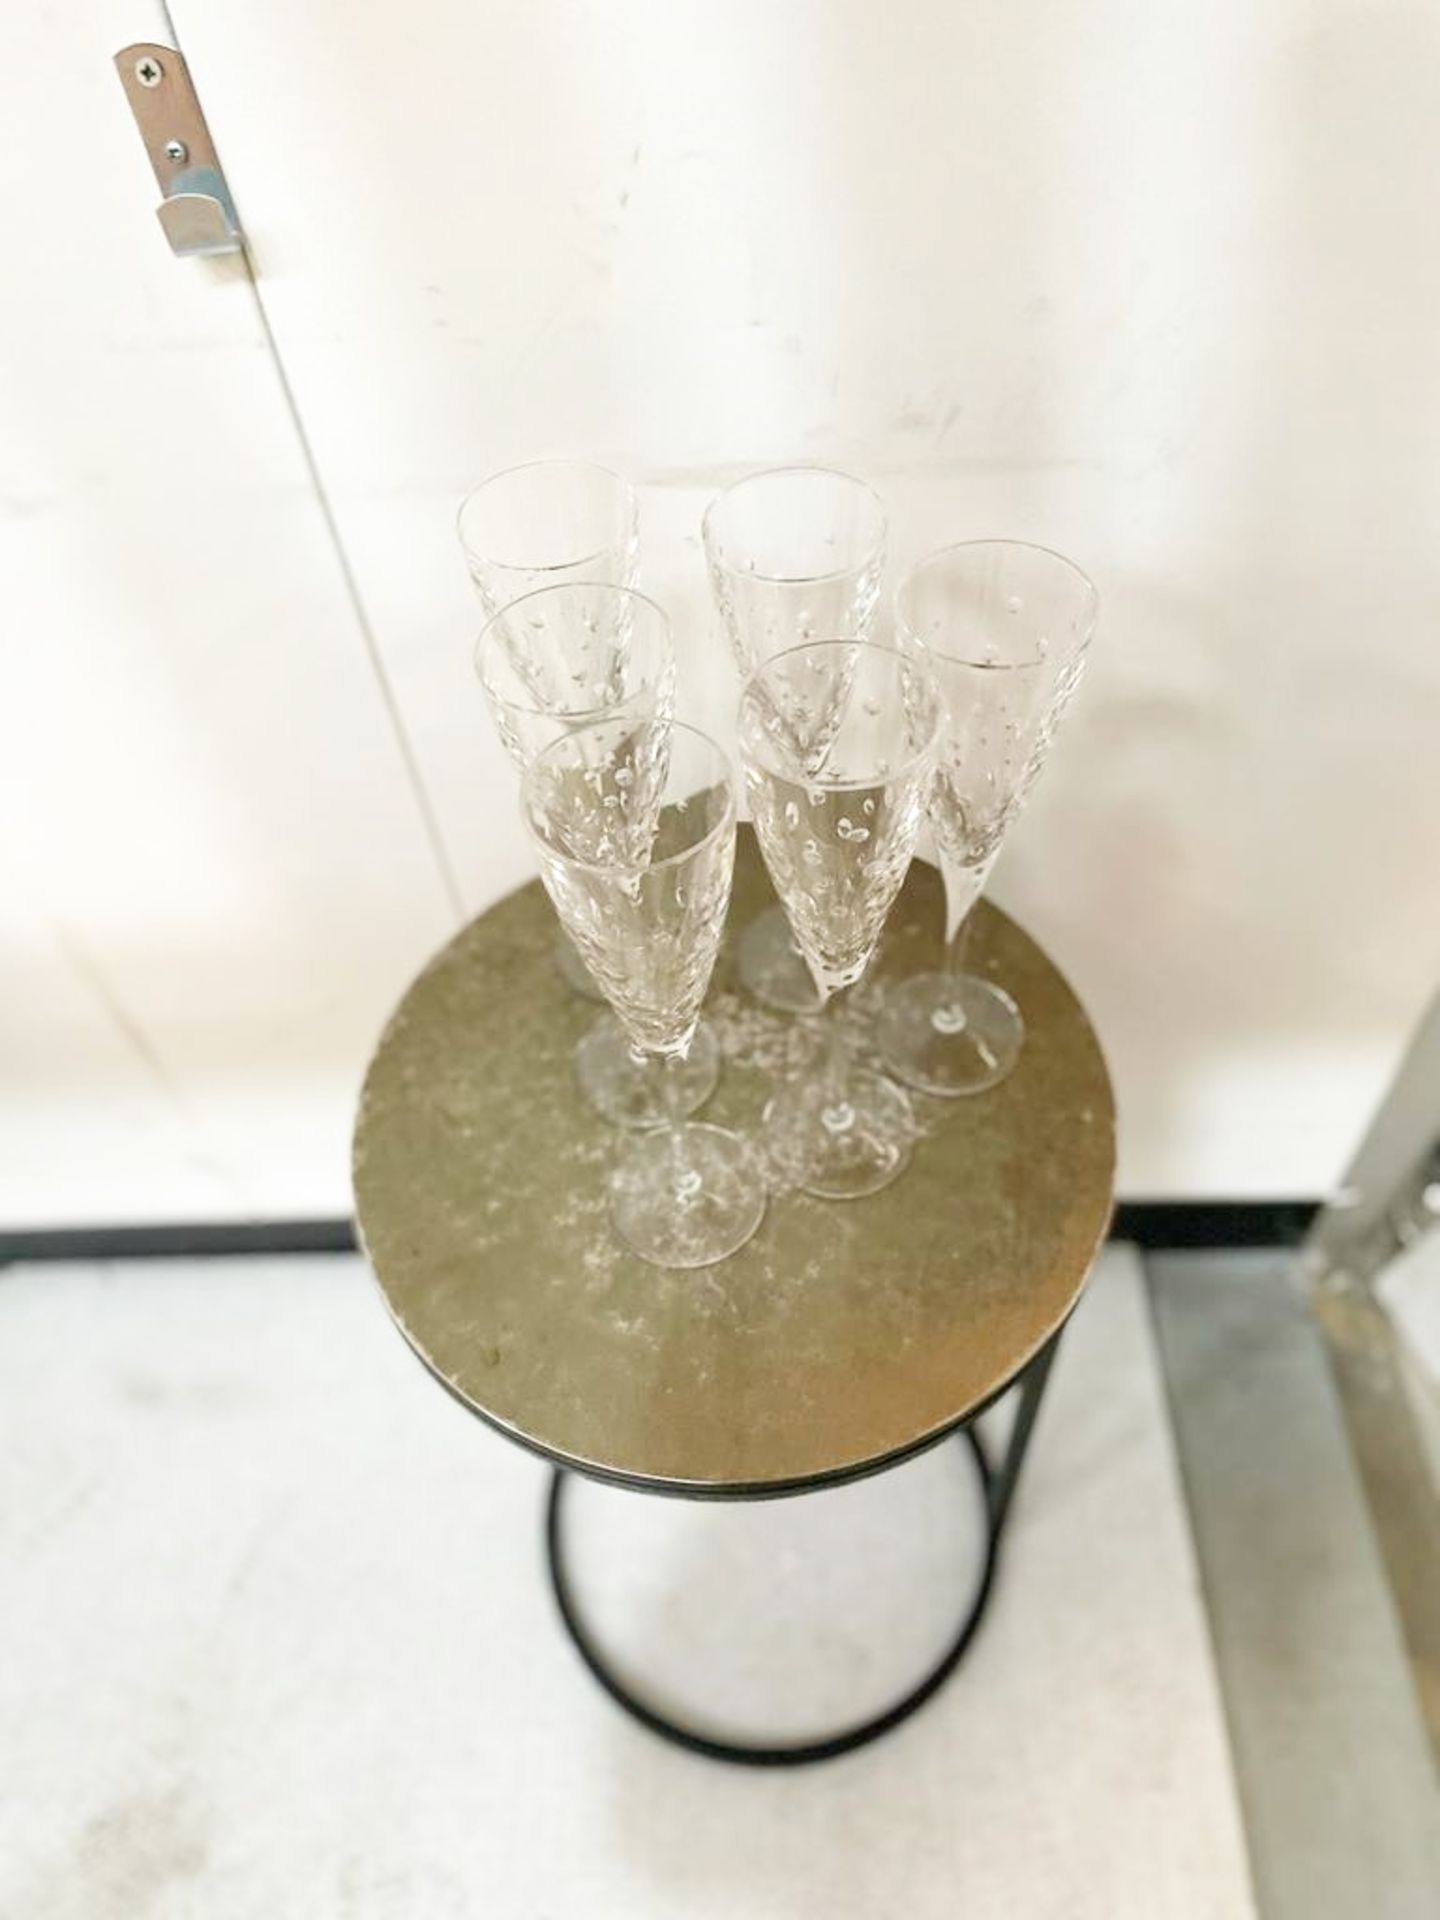 5 x Cristal Dural Champagne Flutes  - Ref: AUR151 - CL652 - Location: Altrincham WA14 - Image 2 of 3